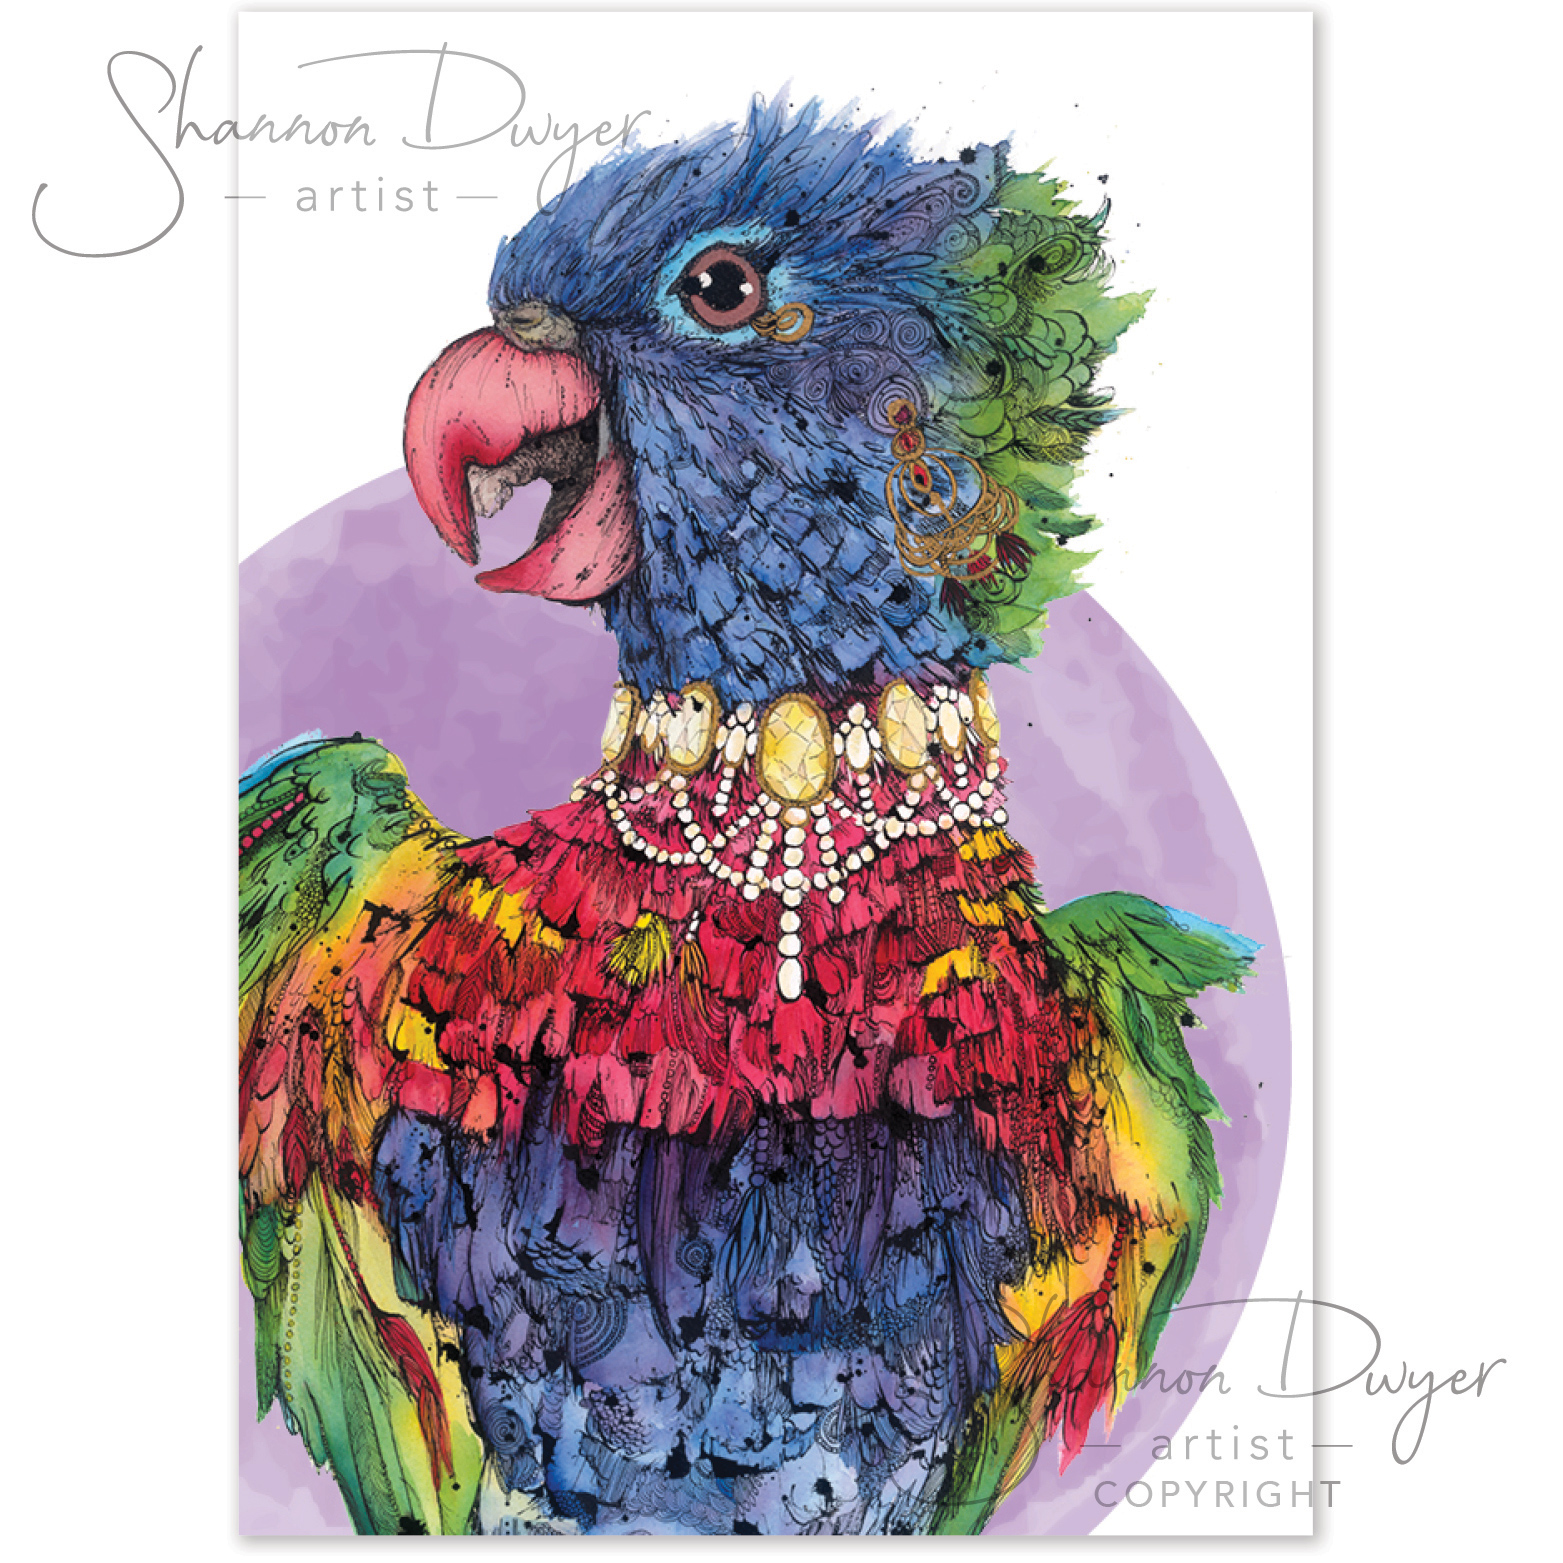 'Rainbow' POP Greeting Card artwork of a Rainbow Lorikeet by Shannon Dwyer Artist